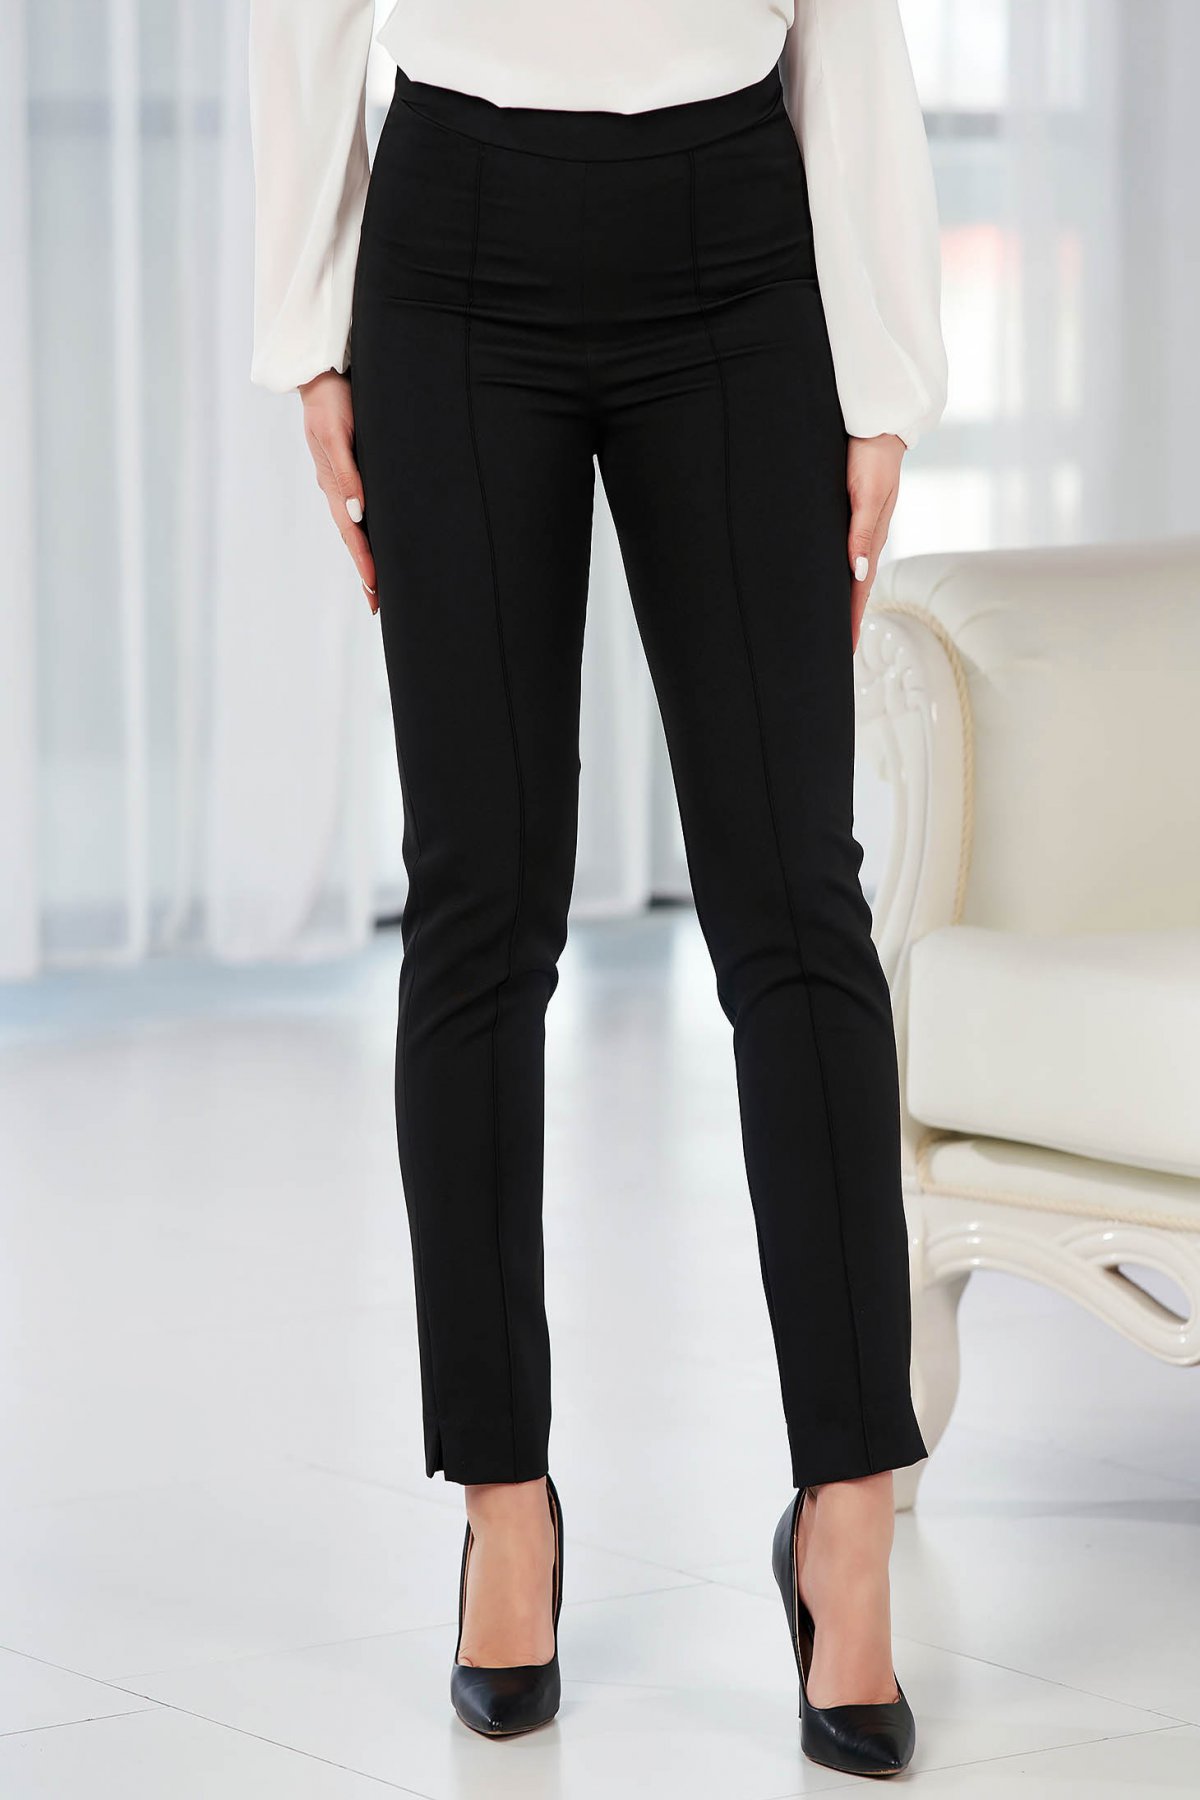 Pantaloni StarShinerS negri eleganti office cu talie inalta din material usor elastic cu buzunare